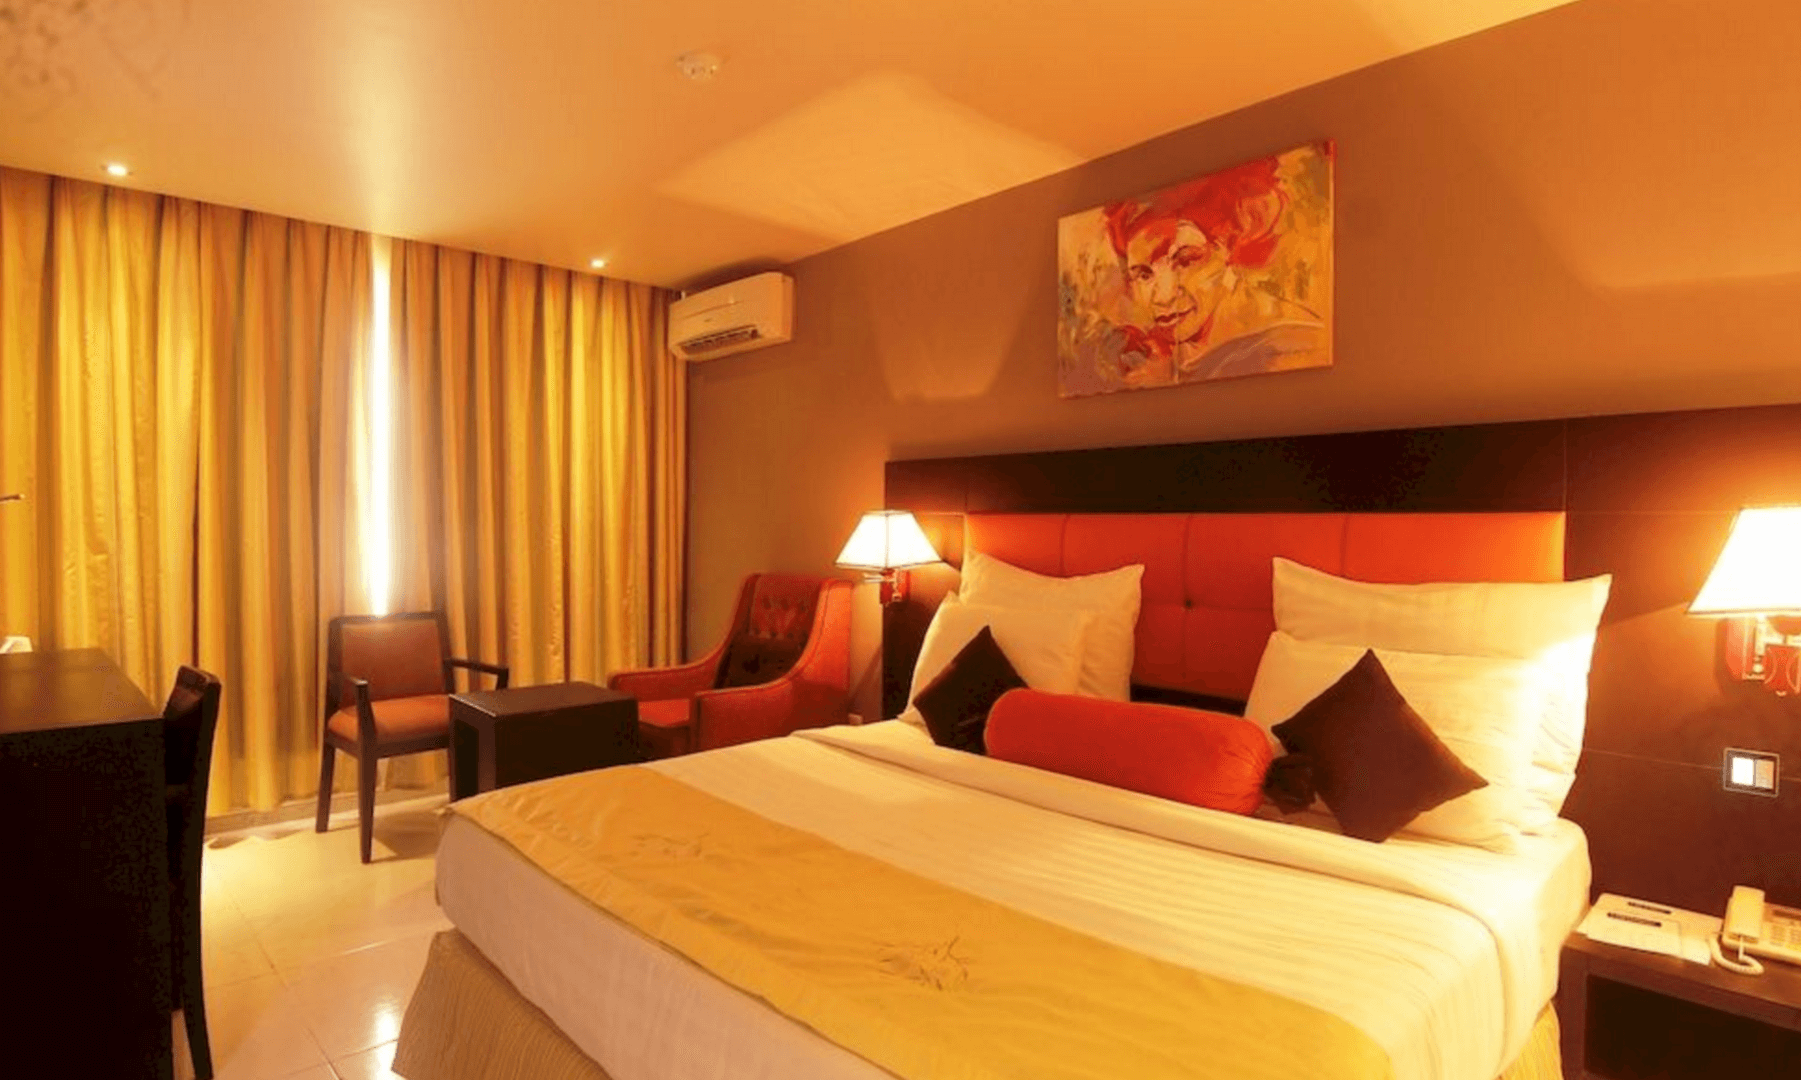 Cheap hotel deals in Lagos, Nigeria | Secret Flying